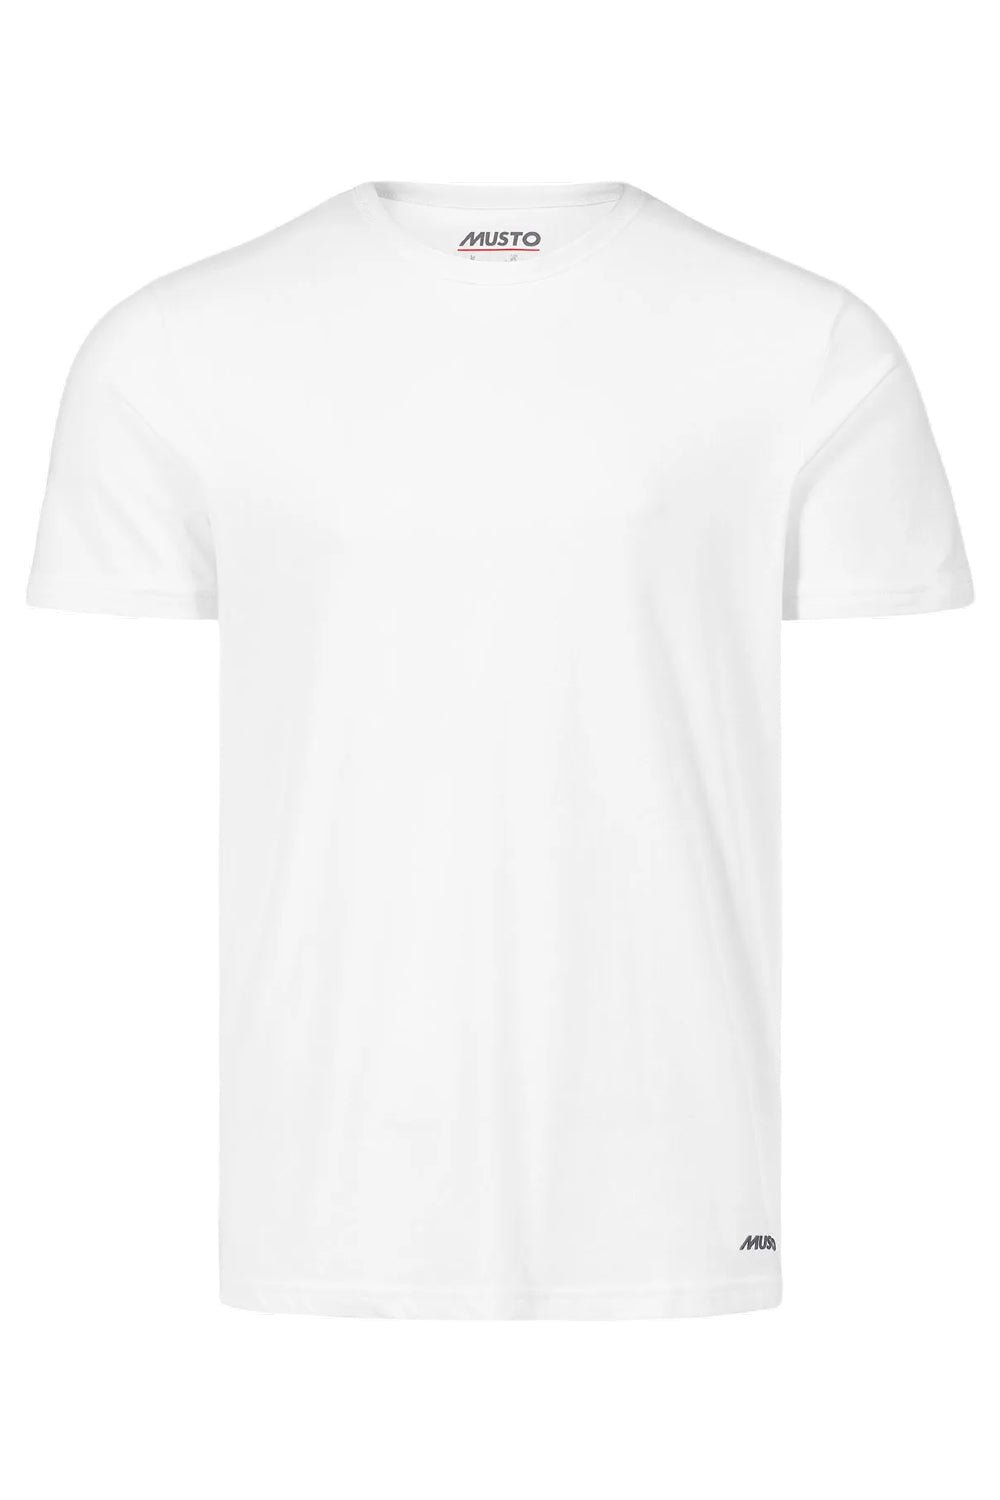 Musto Mens Essentials T-Shirt in White